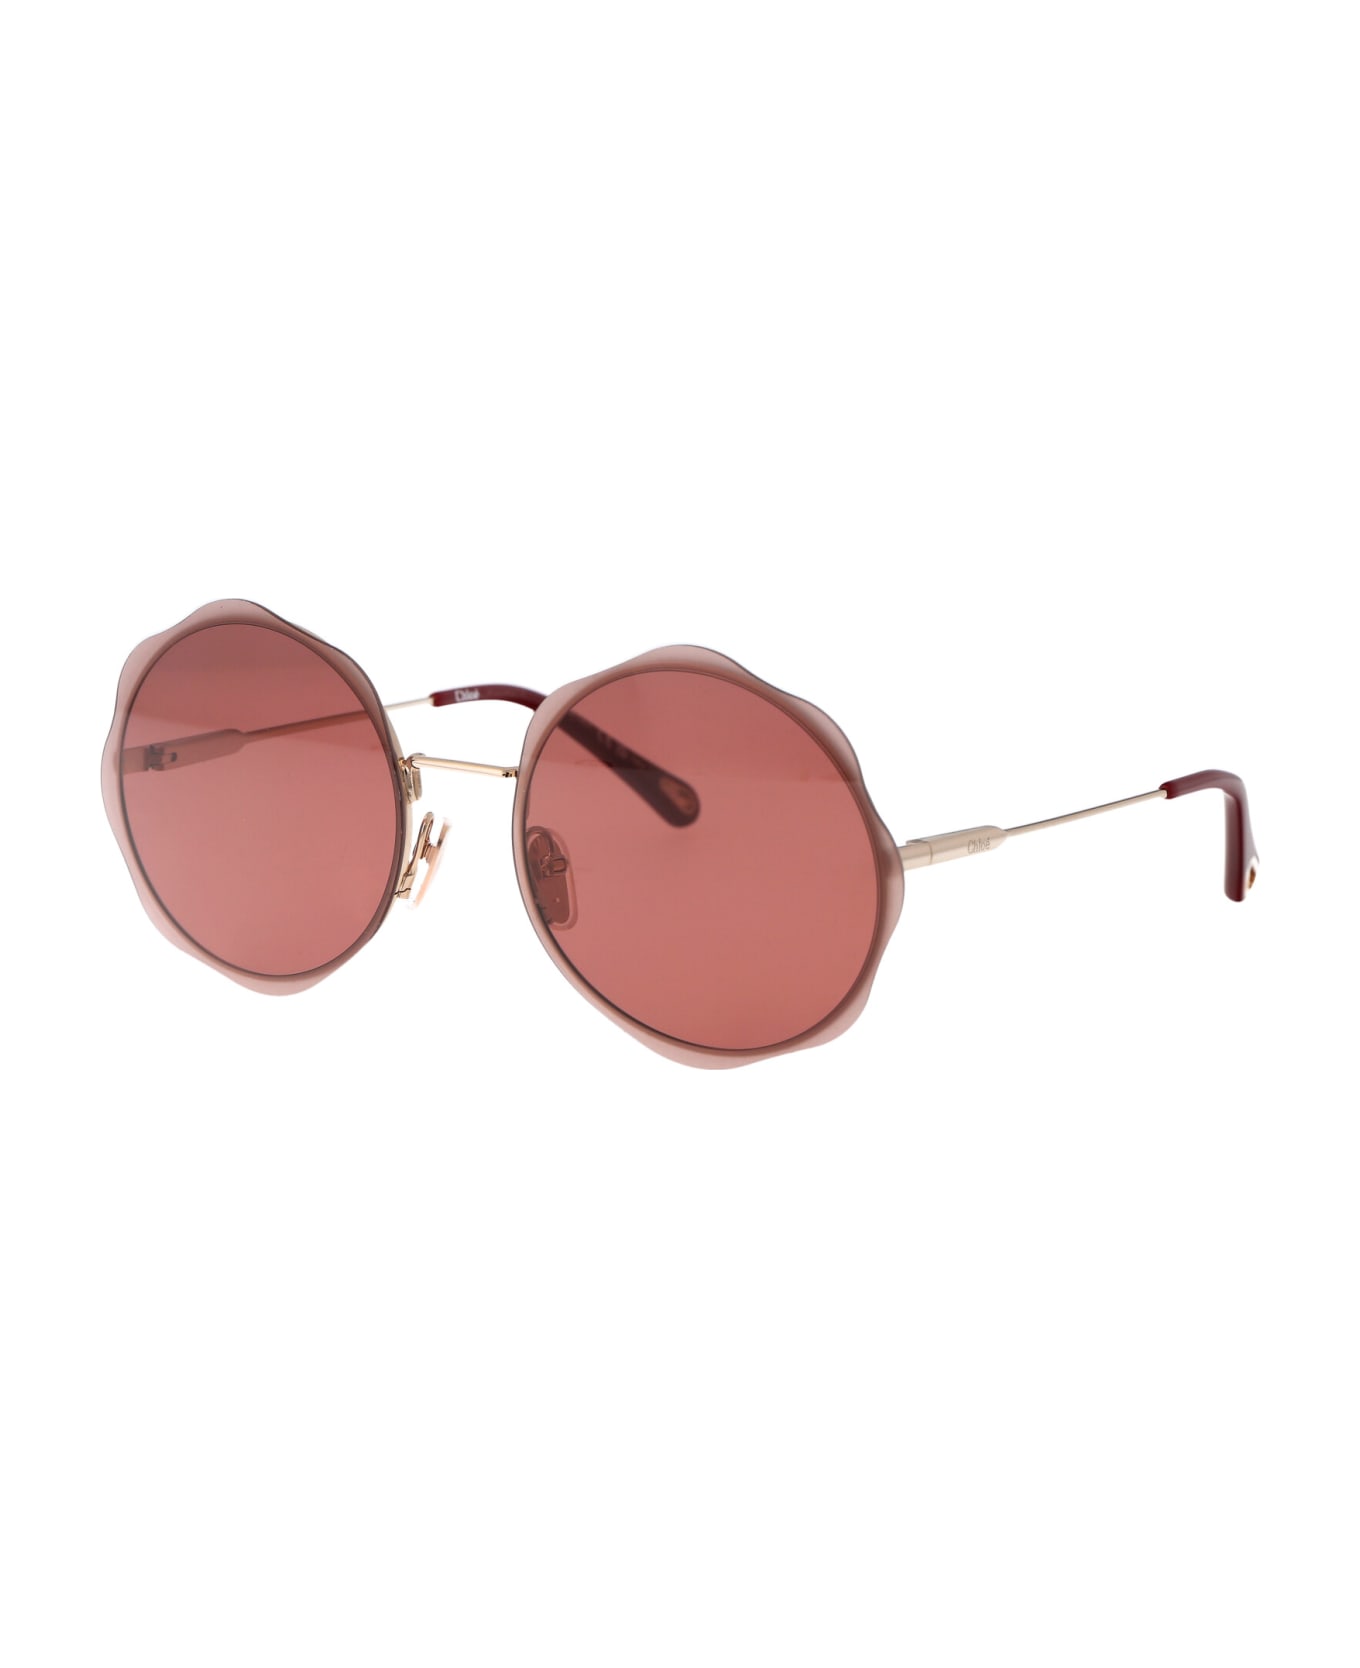 Chloé Eyewear Ch0202s Sunglasses - 003 GOLD GOLD RED